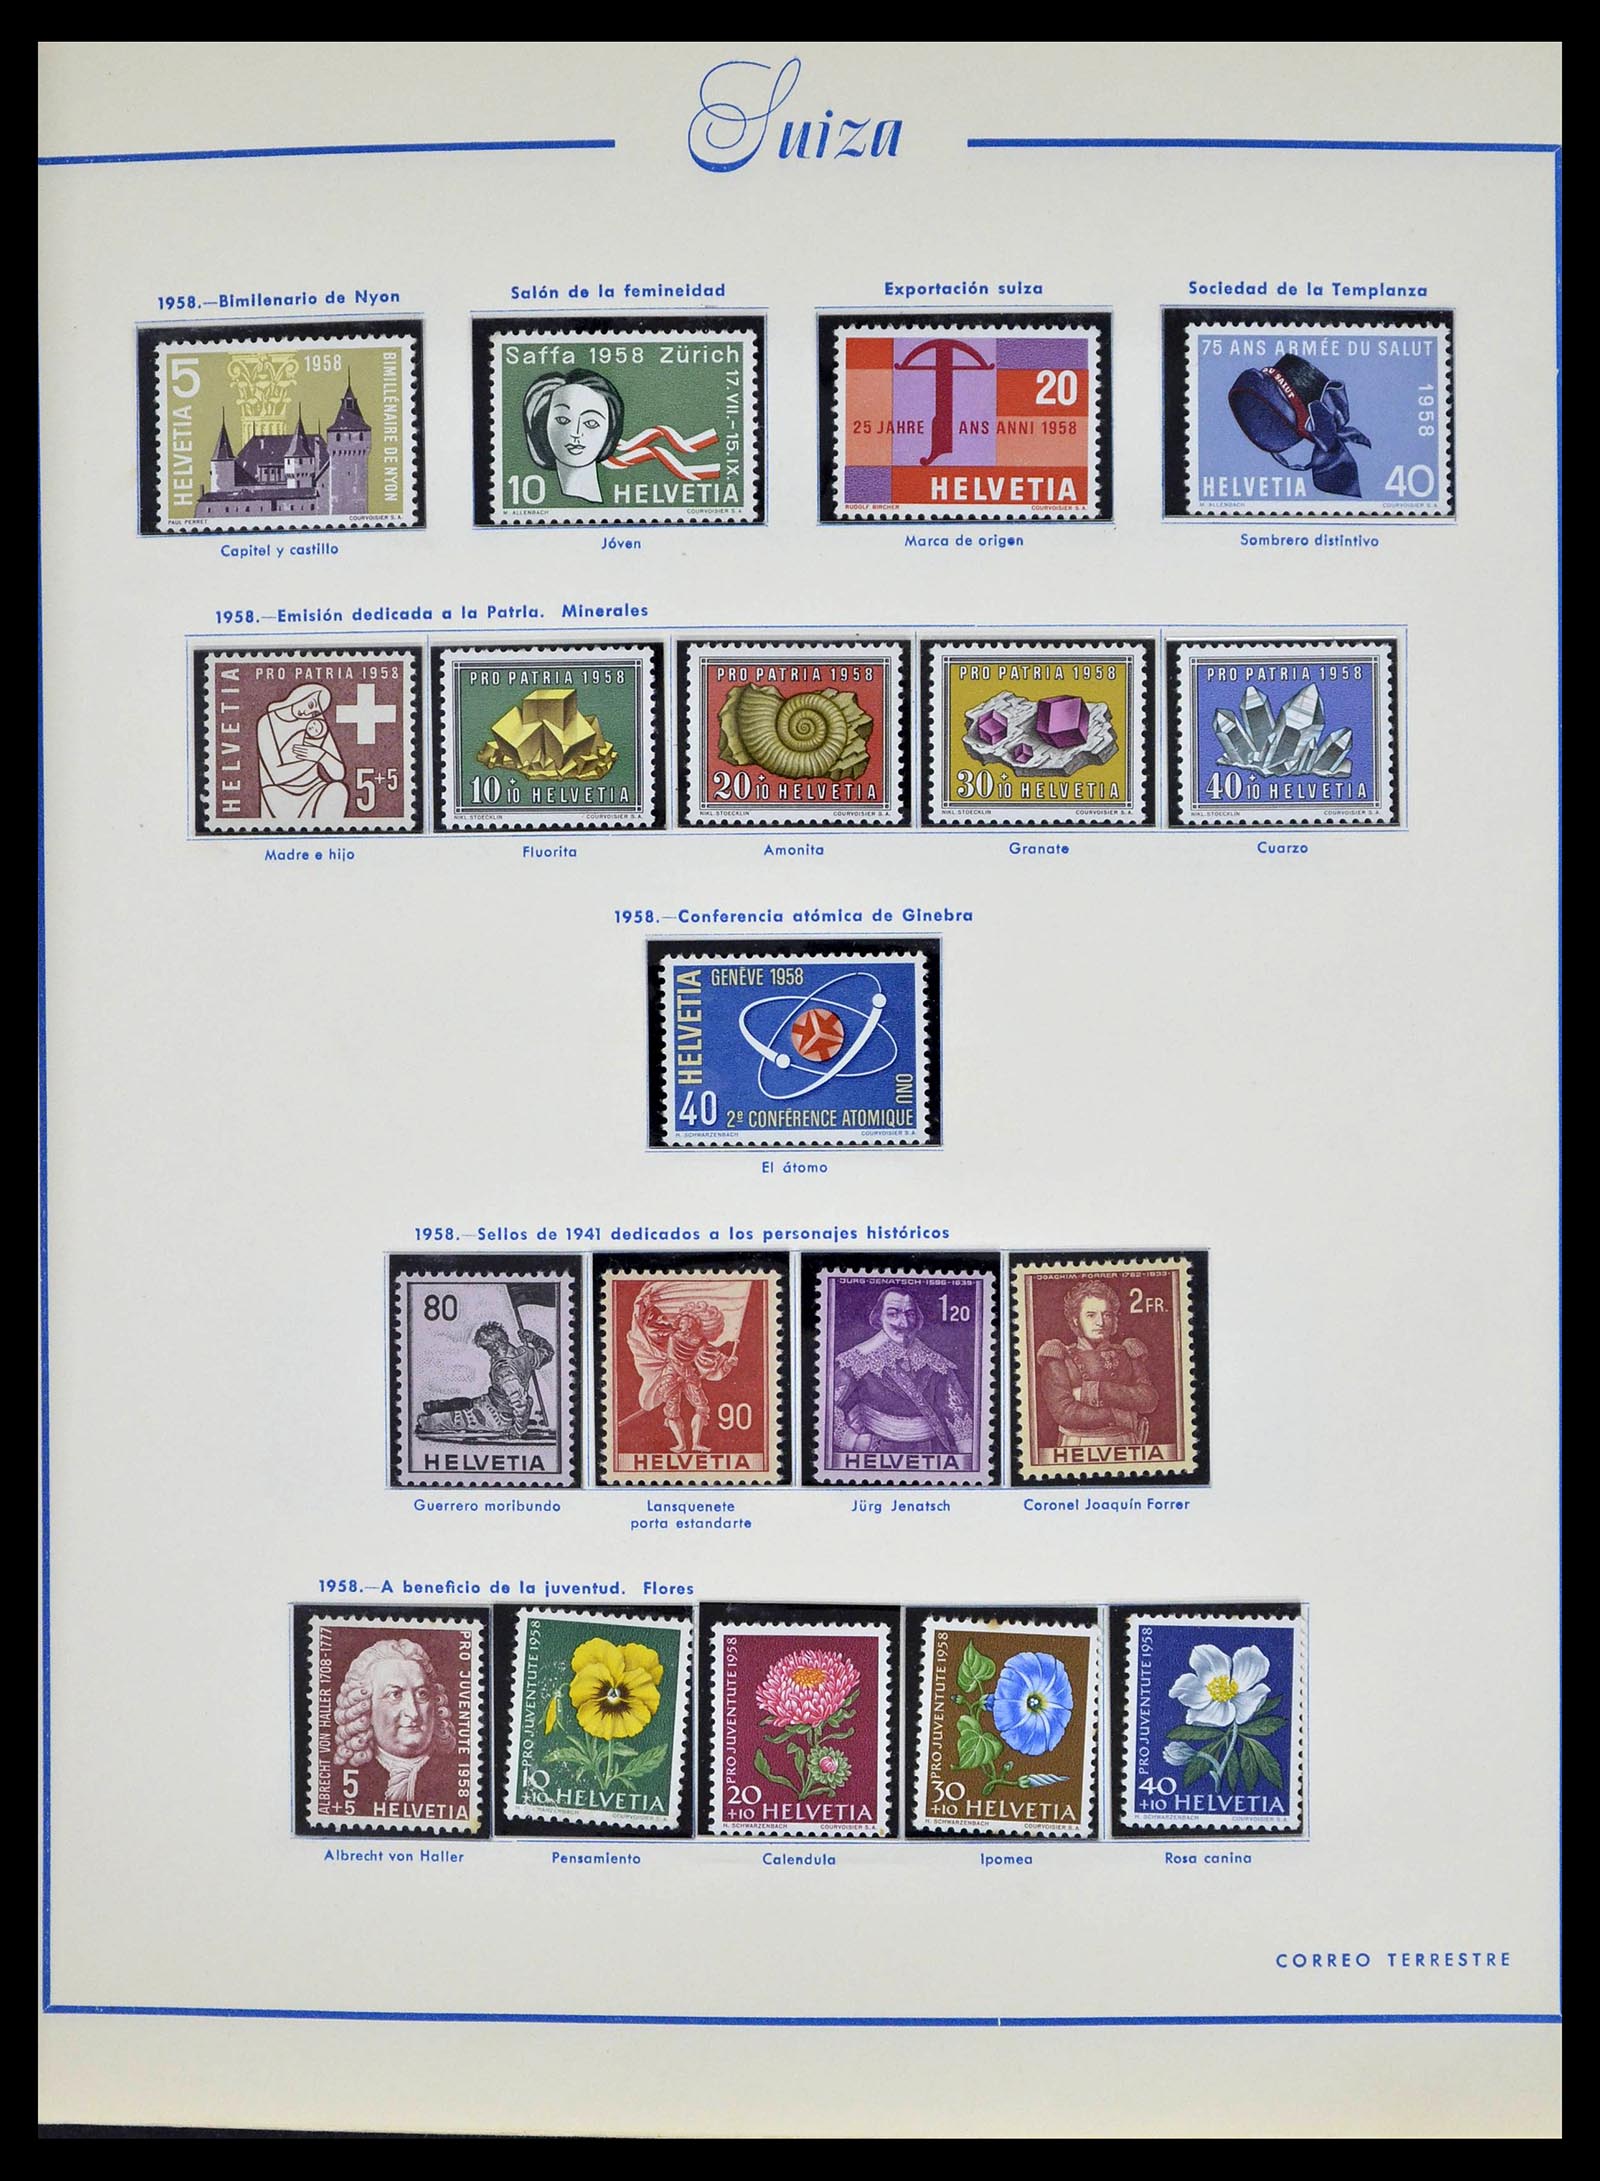 39217 0036 - Stamp collection 39217 Switzerland 1850-1986.